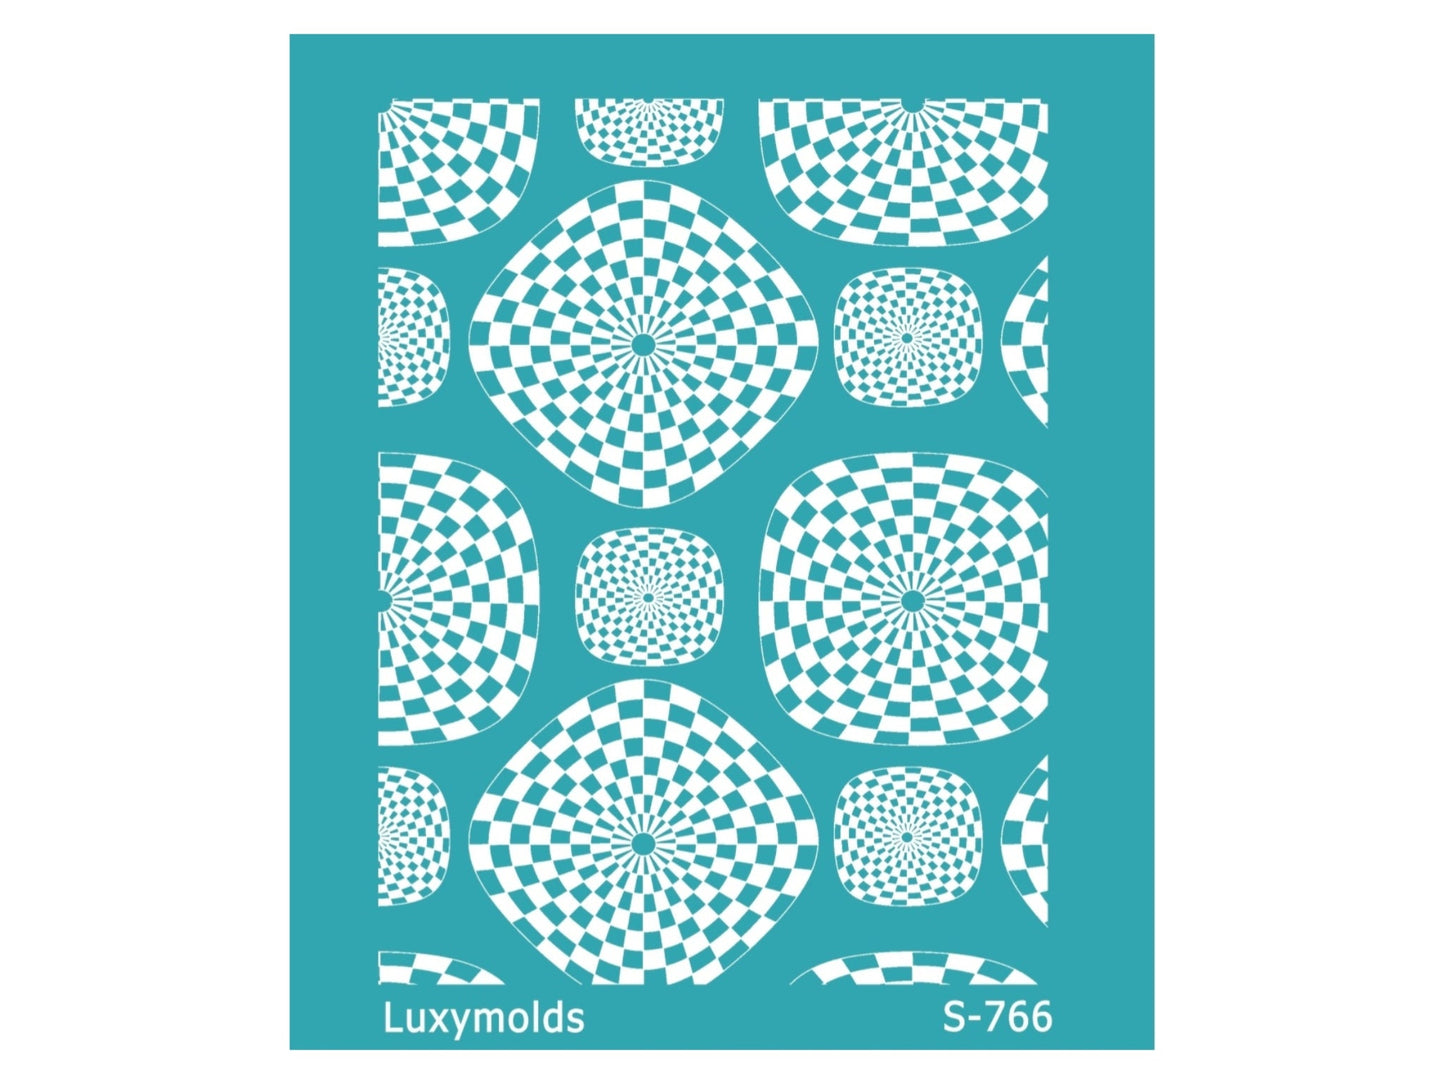 Silk screen stencil for polymer clay "Luxymolds" S-766